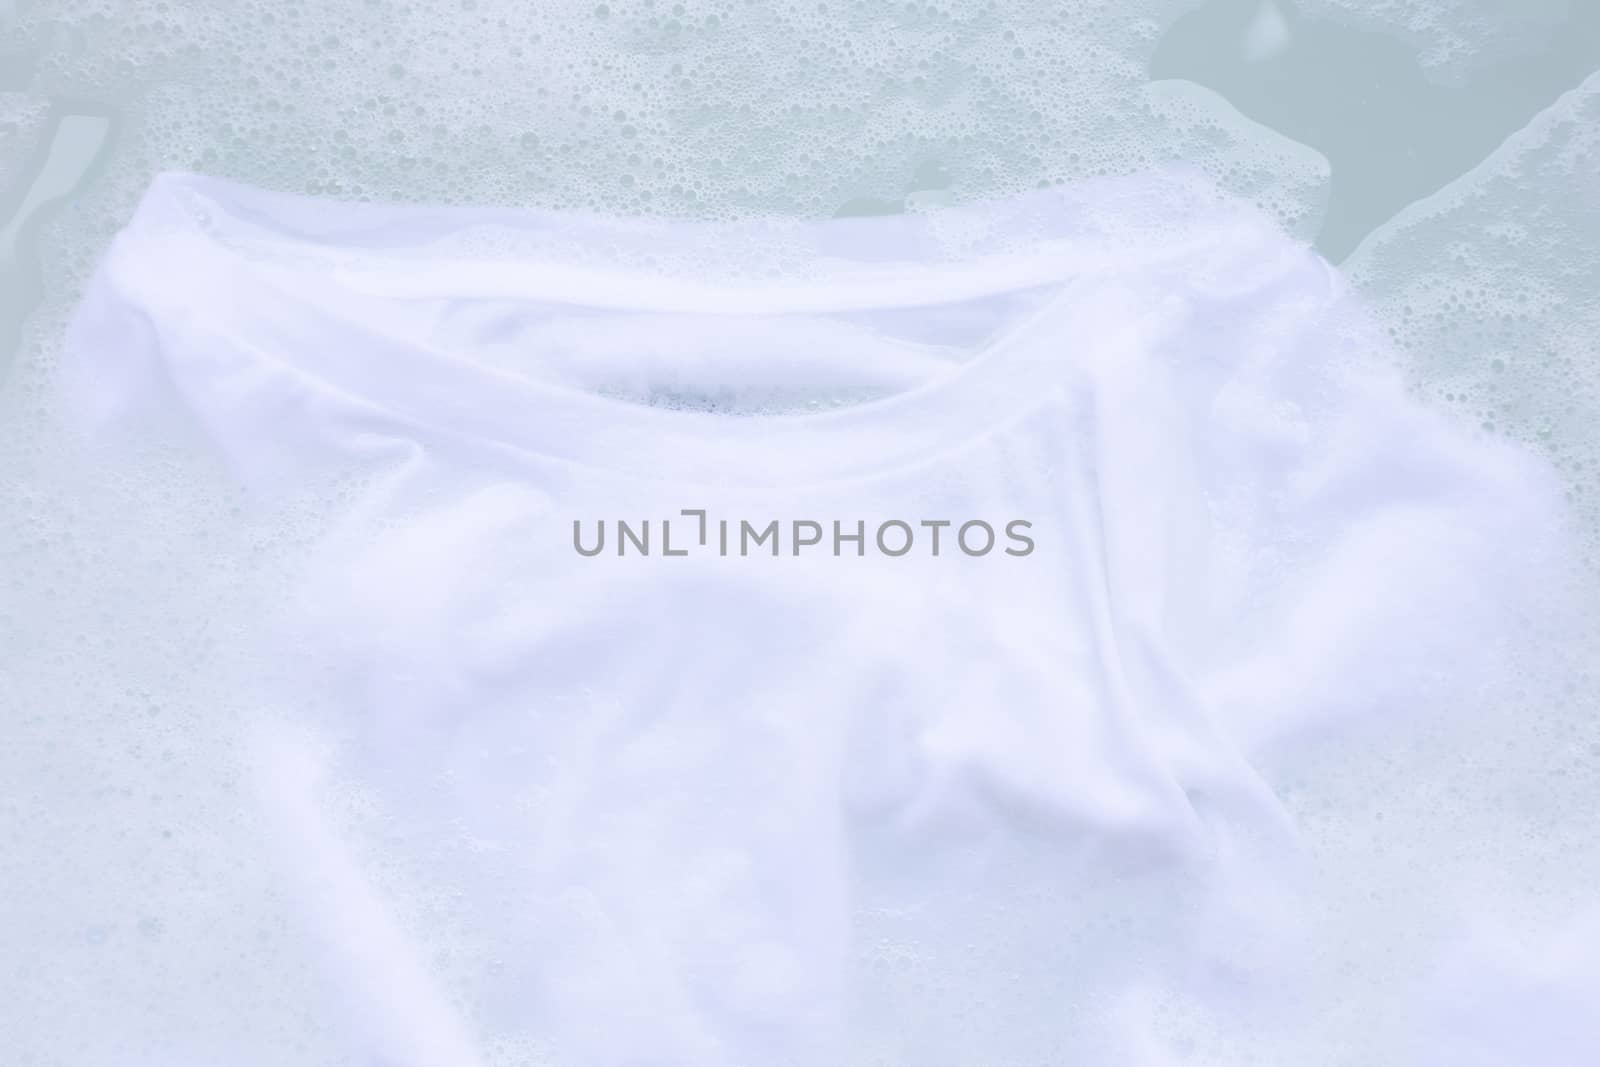 Soak cloth before washing, white t-shirt by Bowonpat